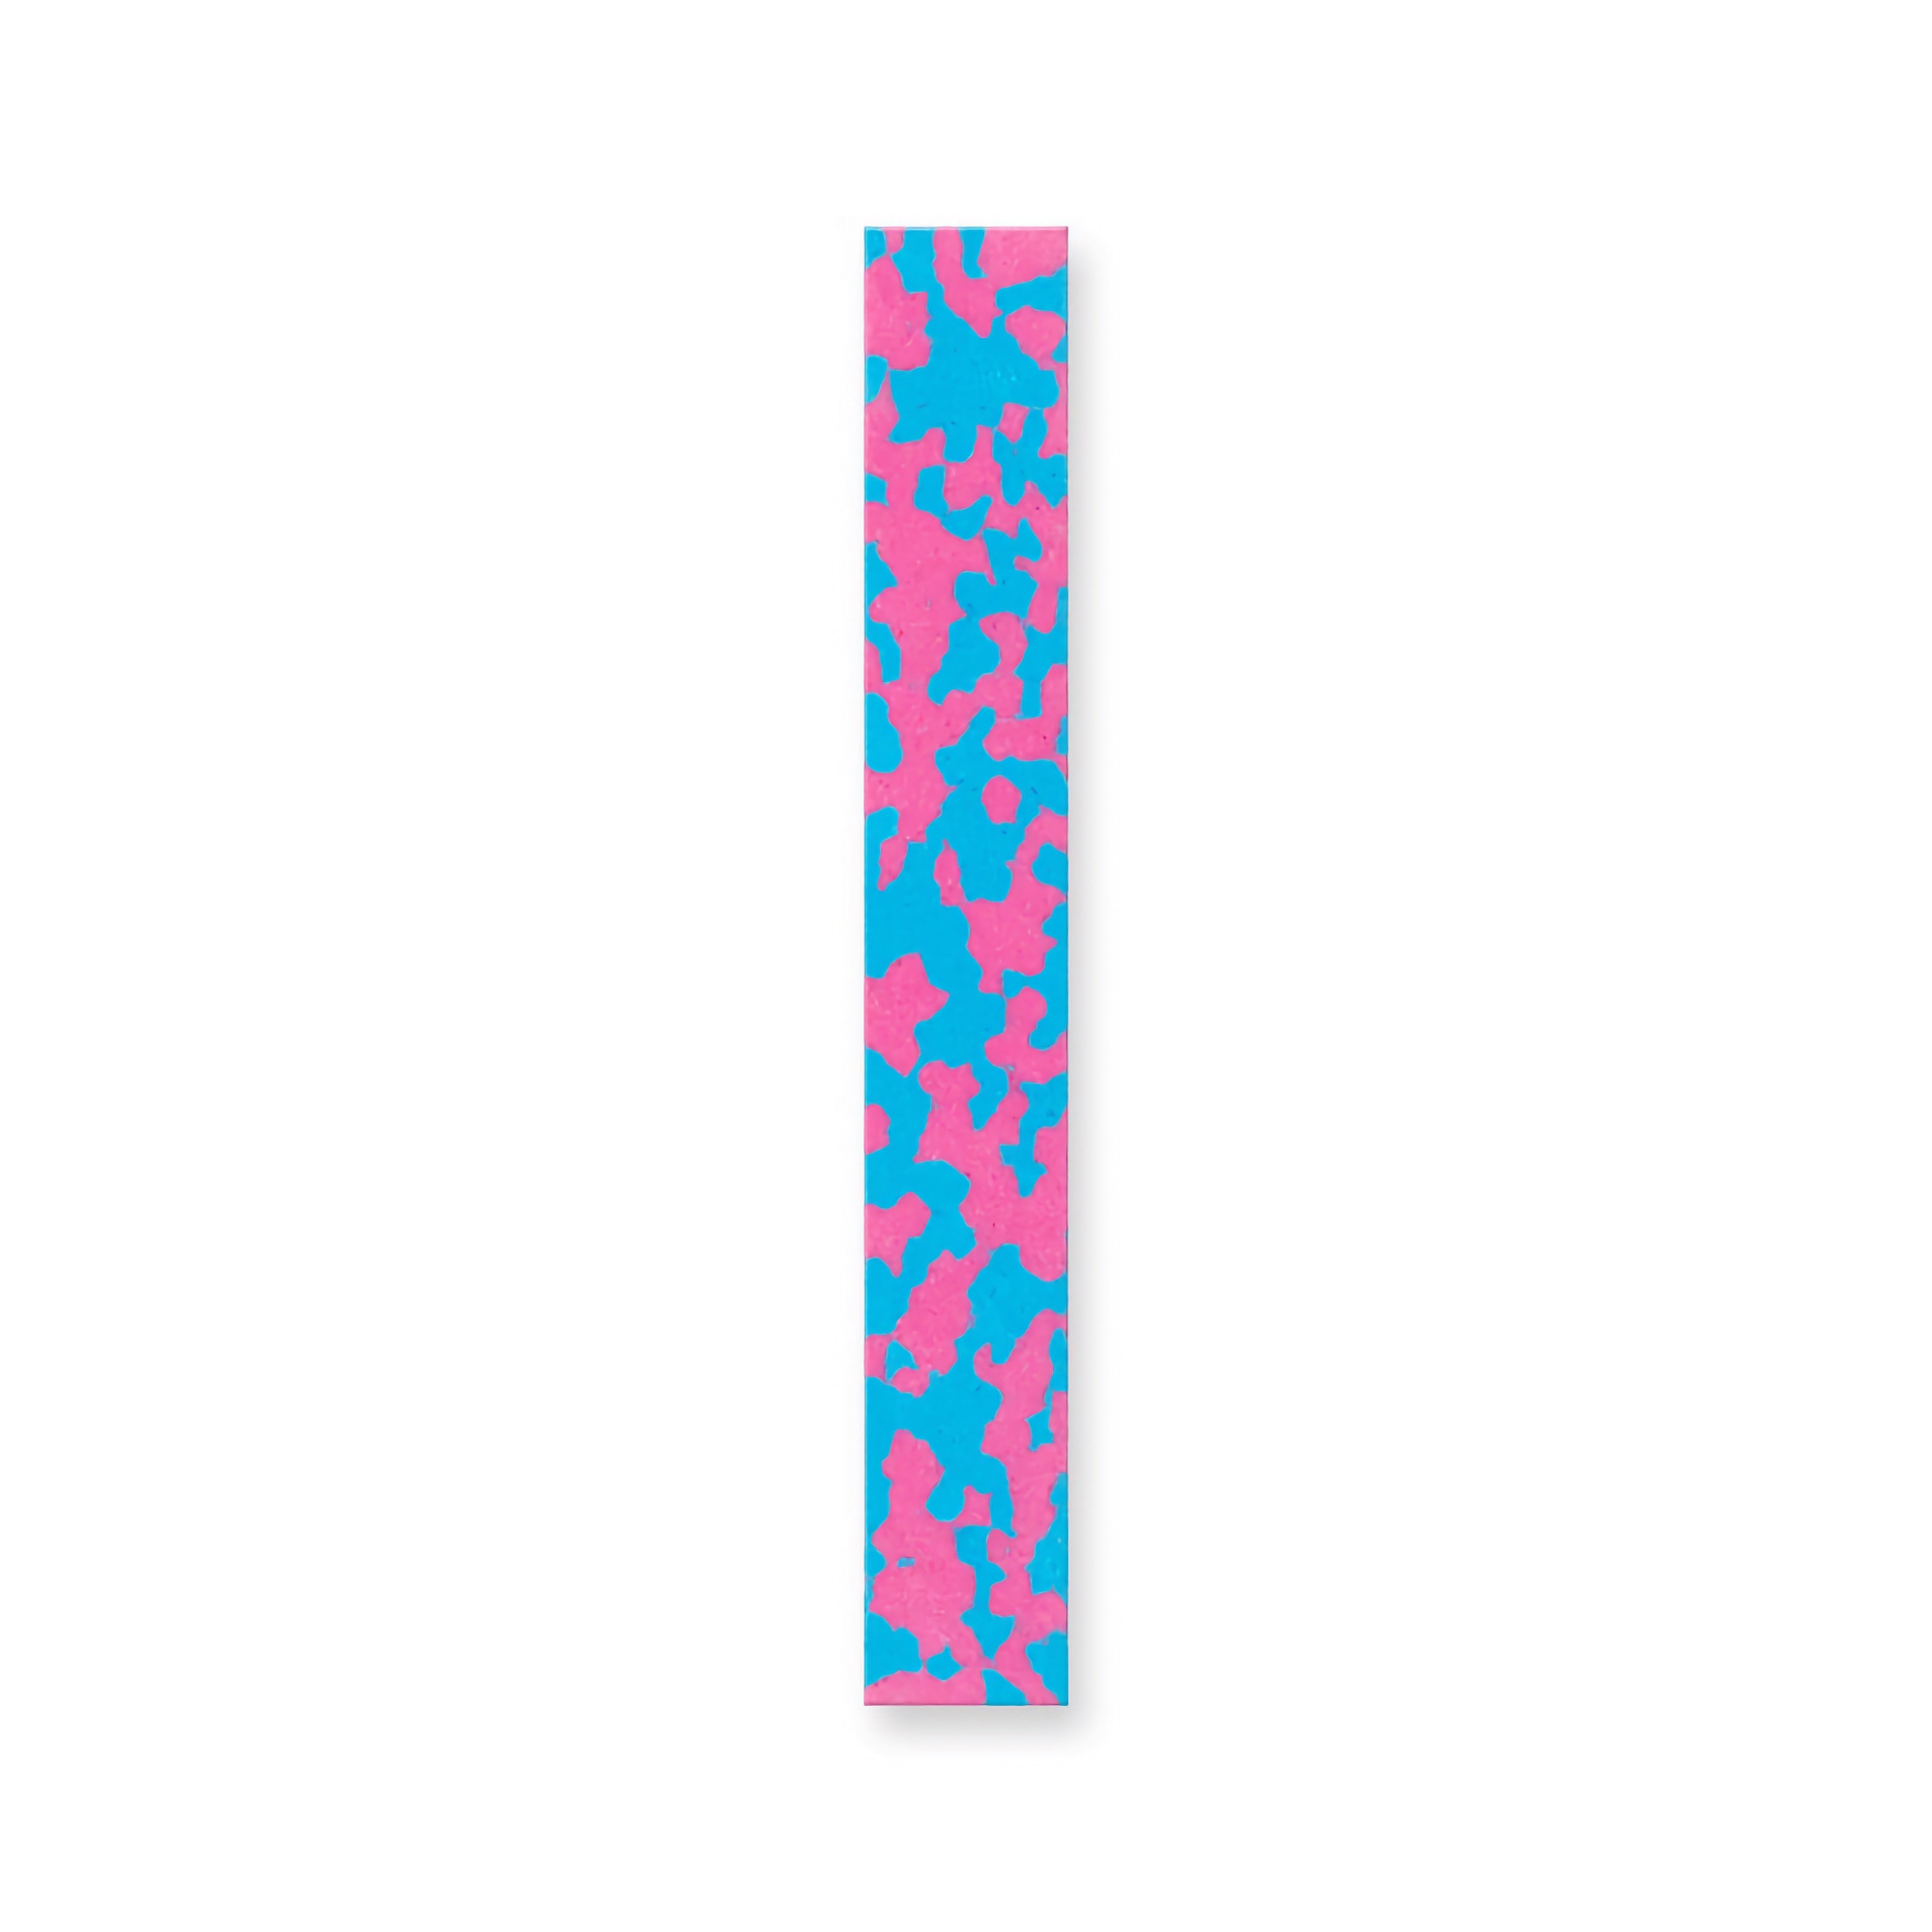 Midori Decoration Crayon Marble Pink x Light Blue Refill